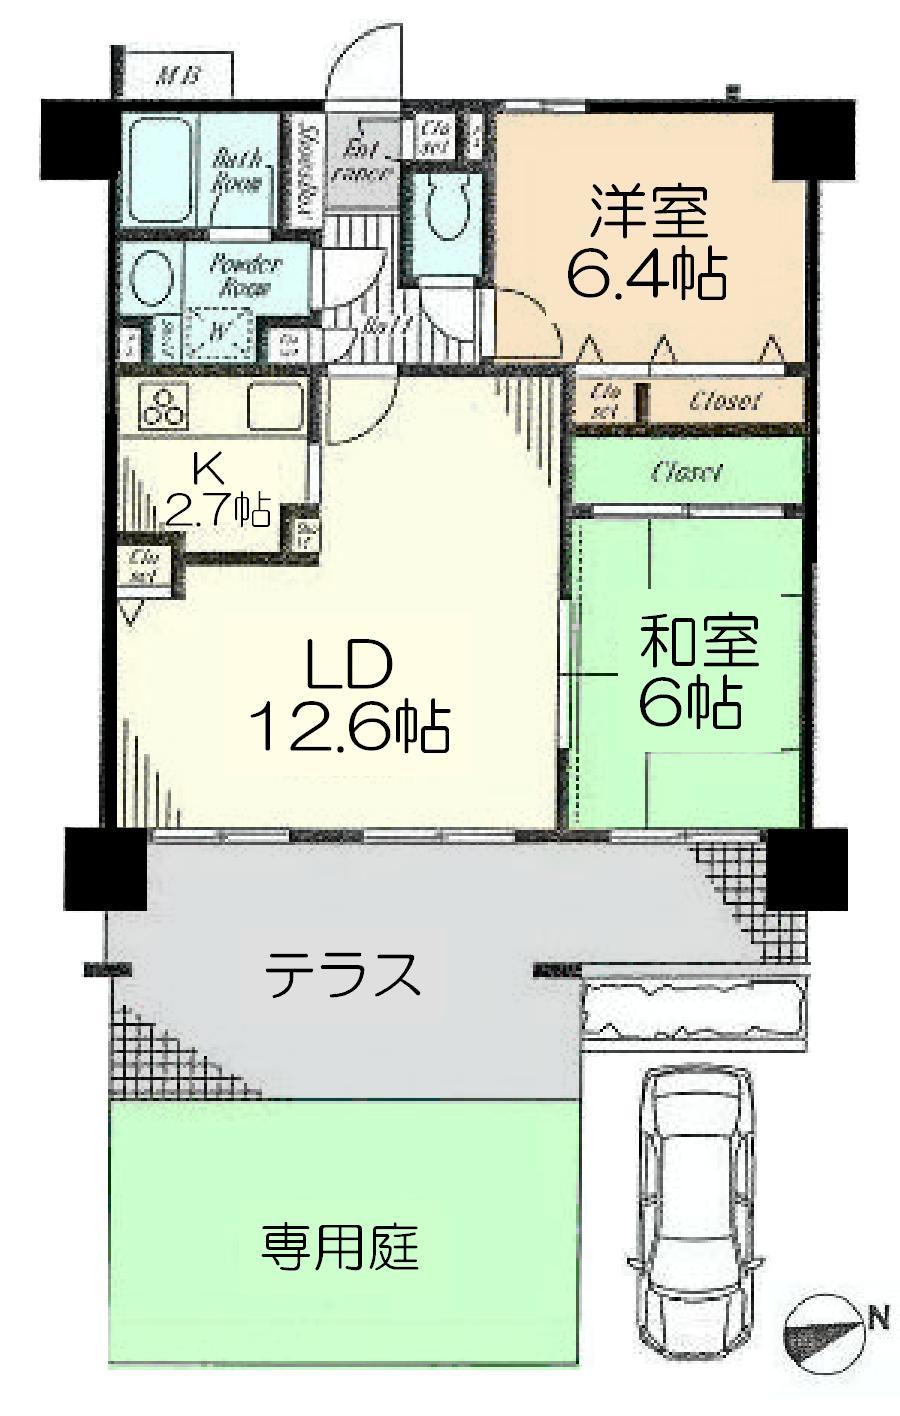 Floor plan. 2LDK, Price 21,980,000 yen, Footprint 61.6 sq m